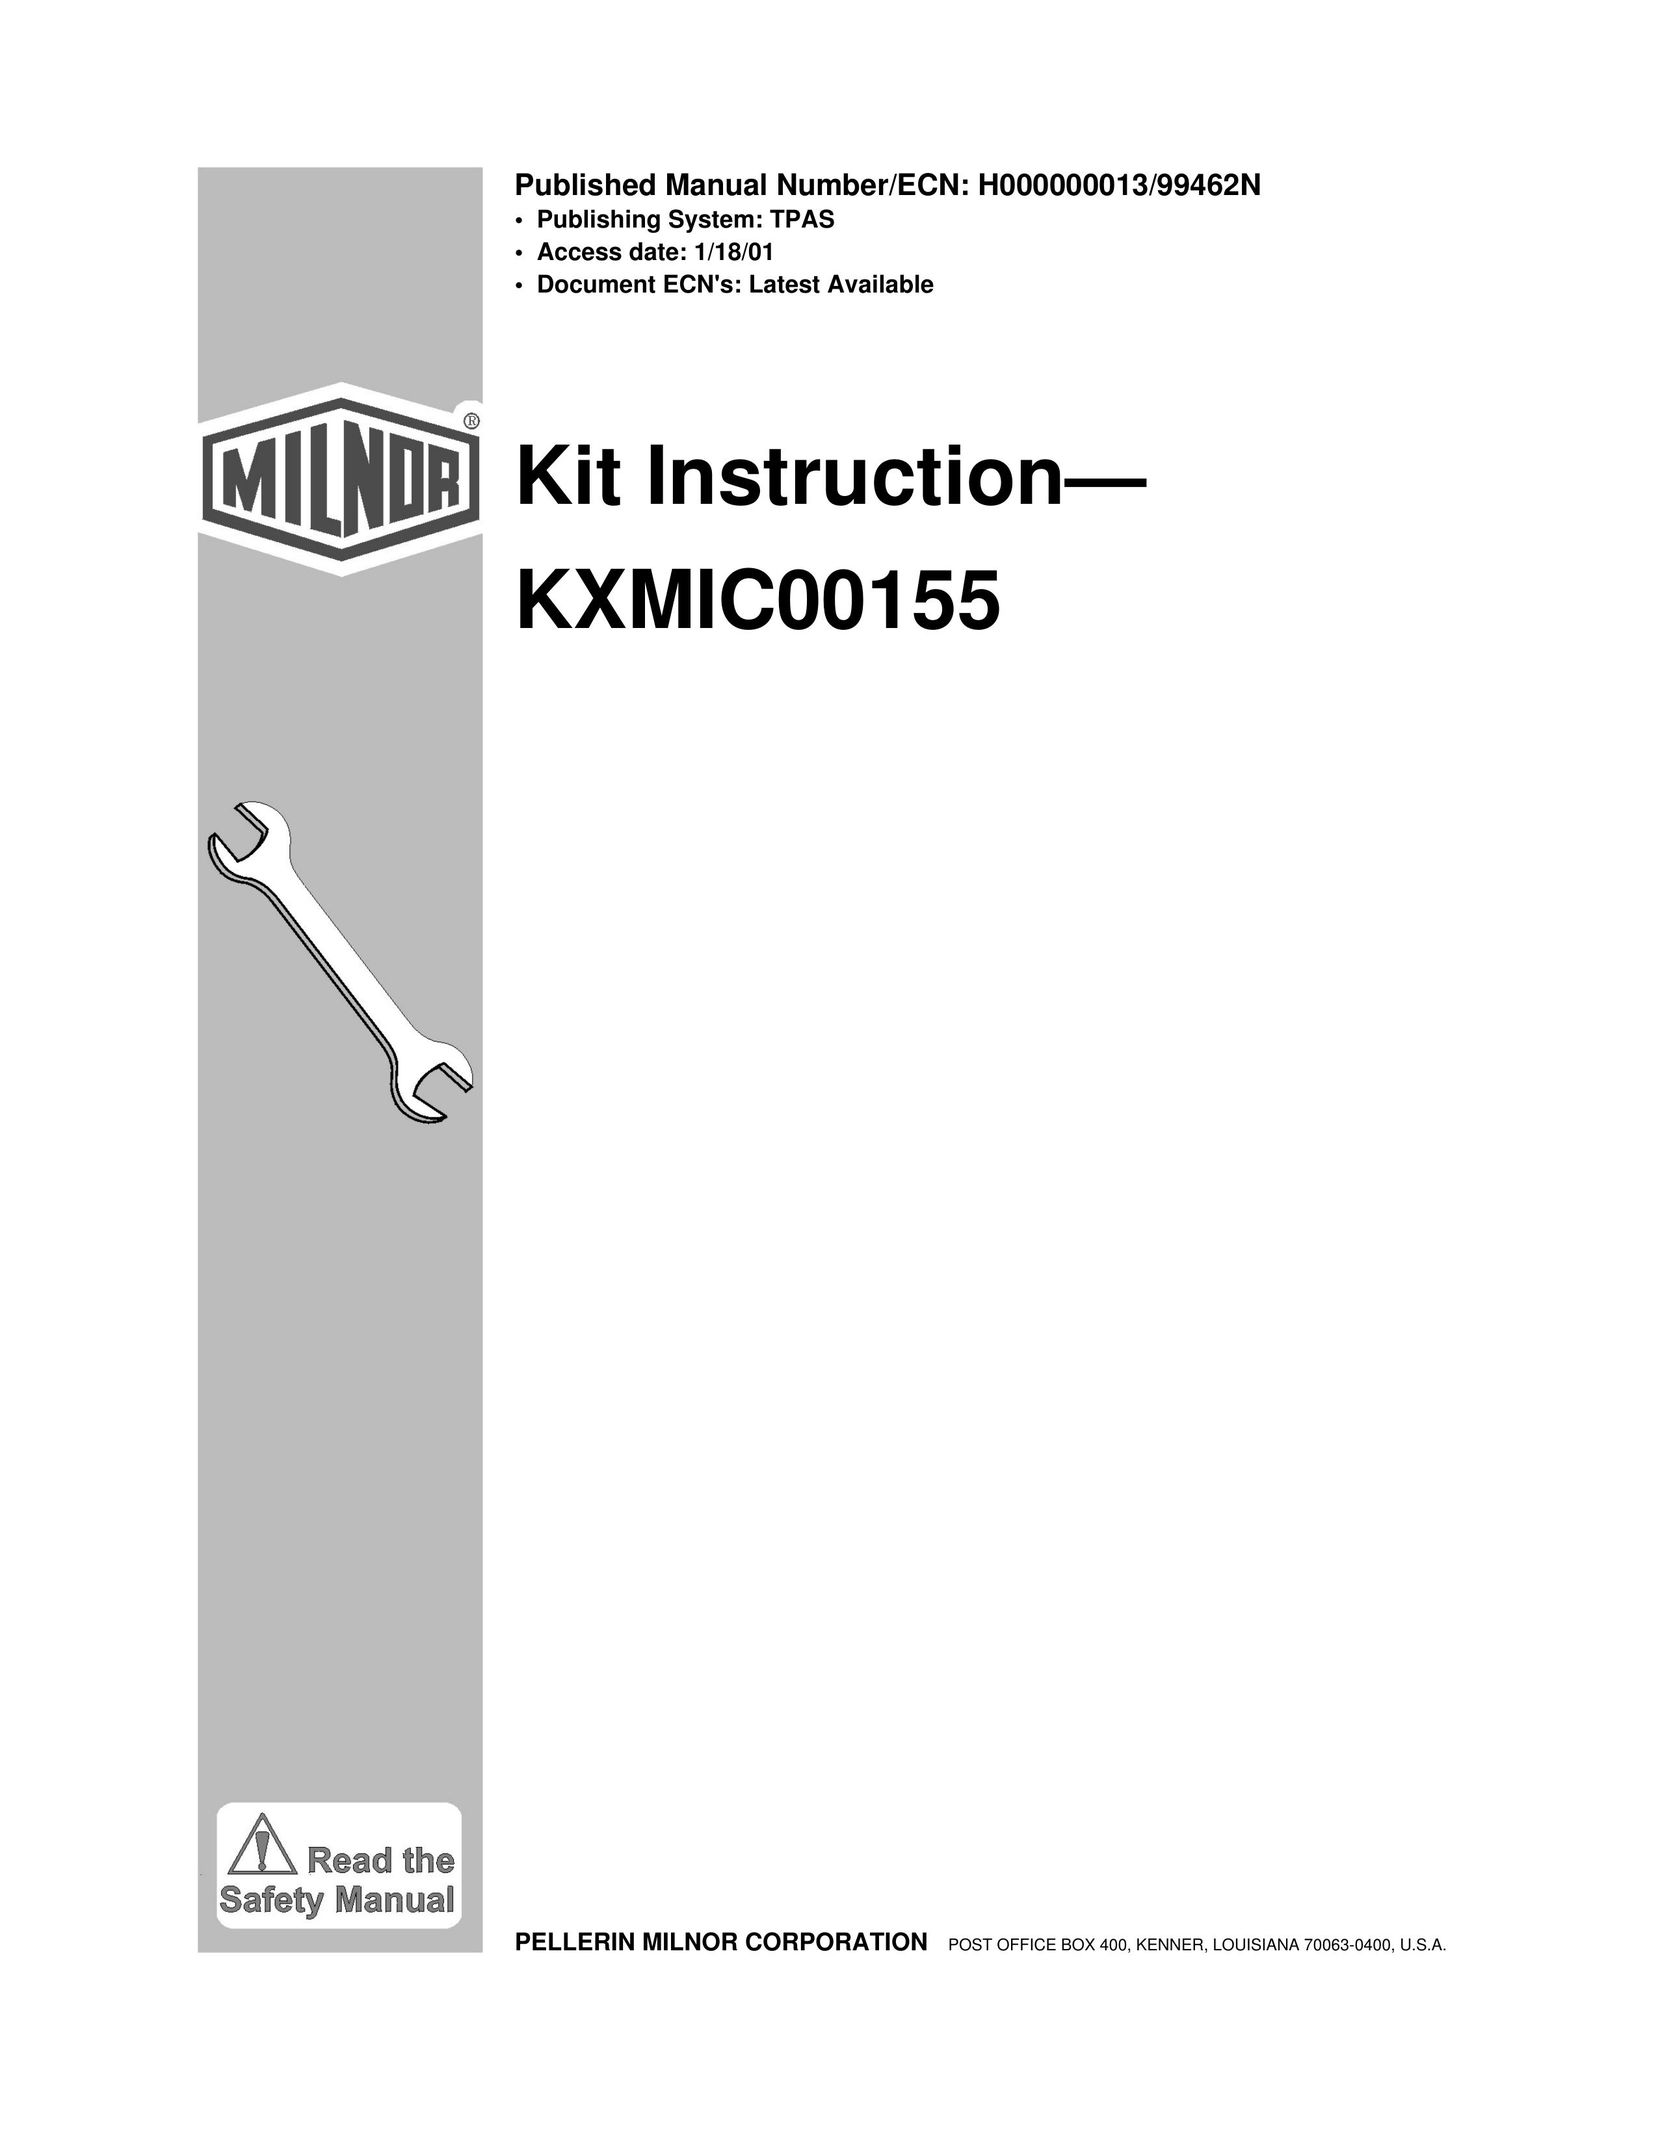 Milnor KXMIC00155 Computer Hardware User Manual